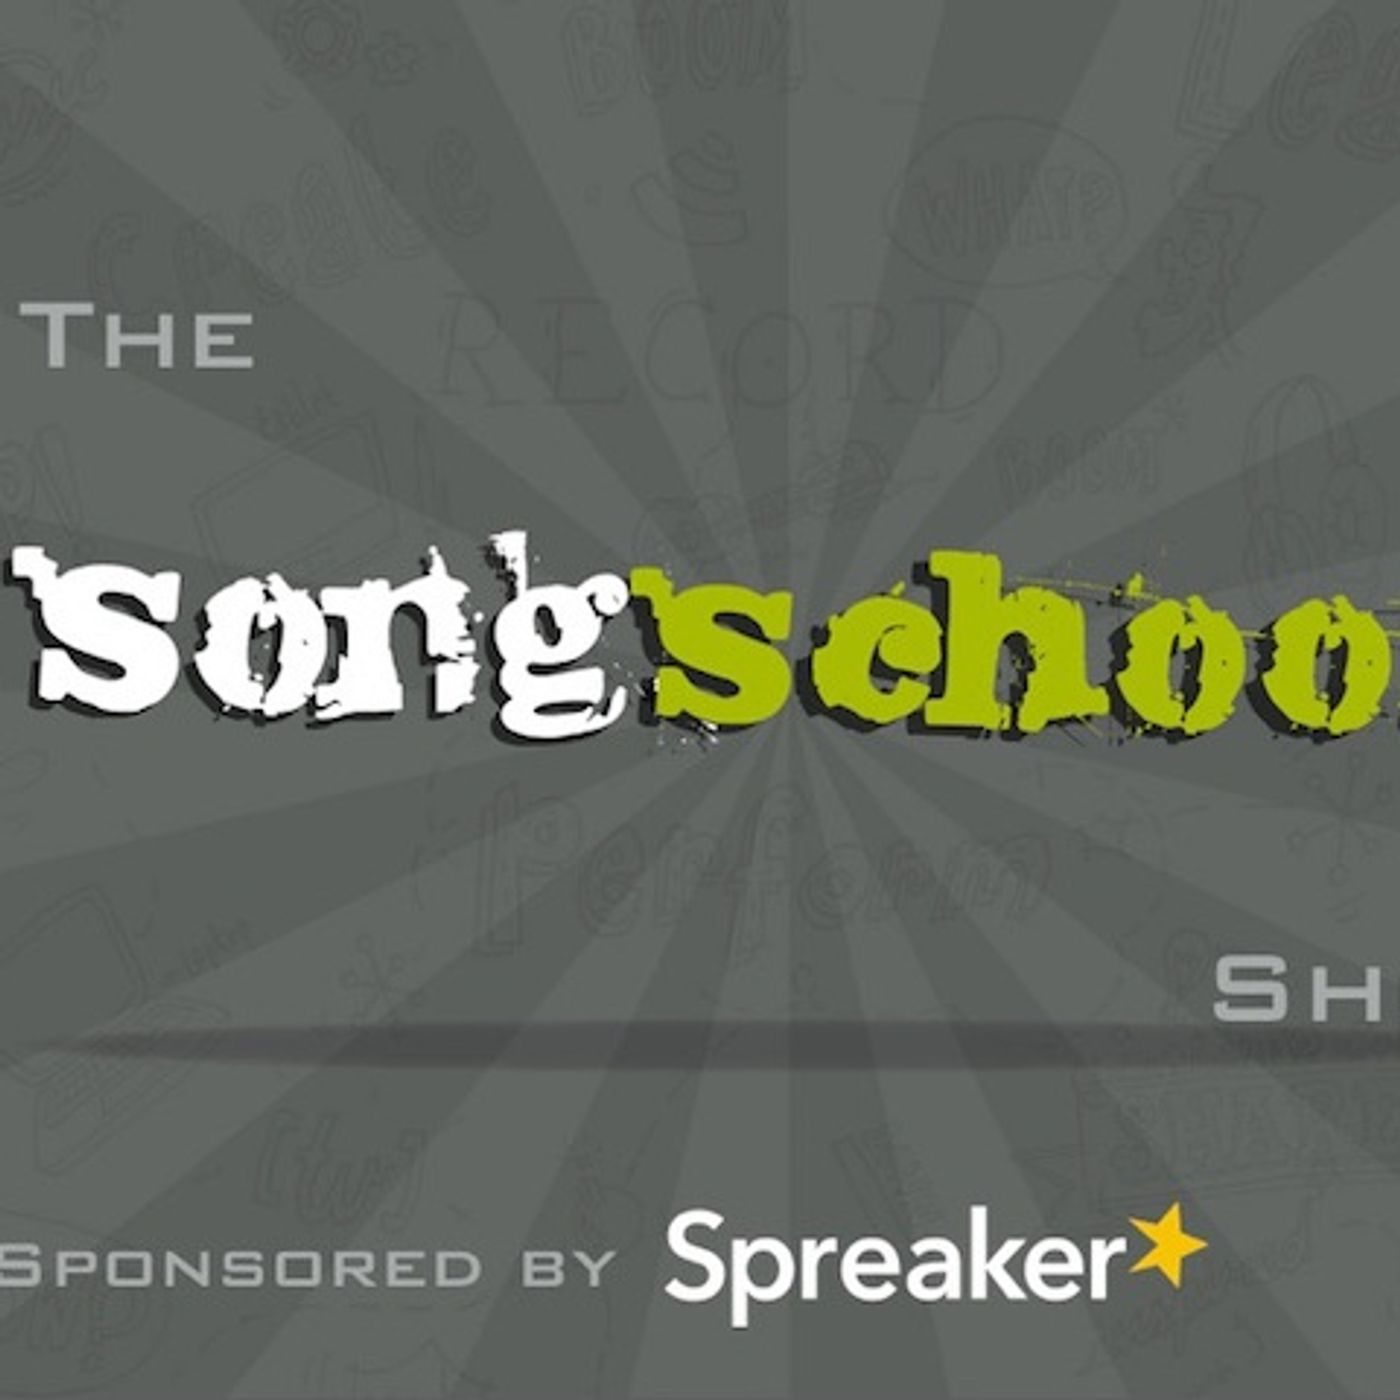 The Songschool Show @ Loreto StGreen 4